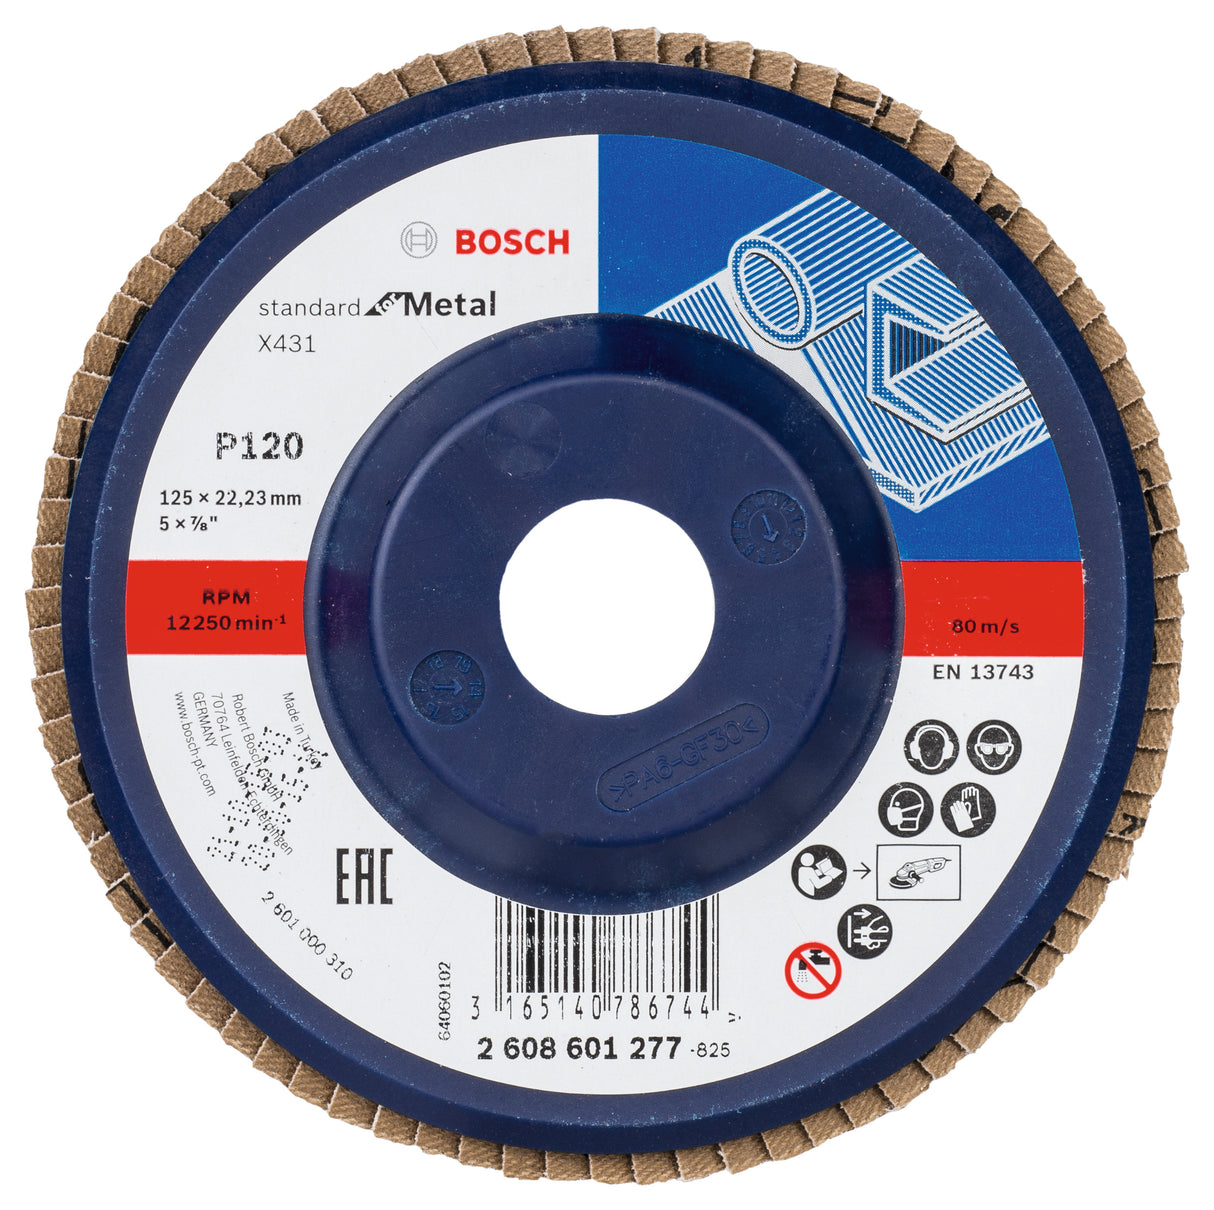 Bosch Professional X431 Flap Disc - Standard for Metal 125mm x 22.23mm - G120